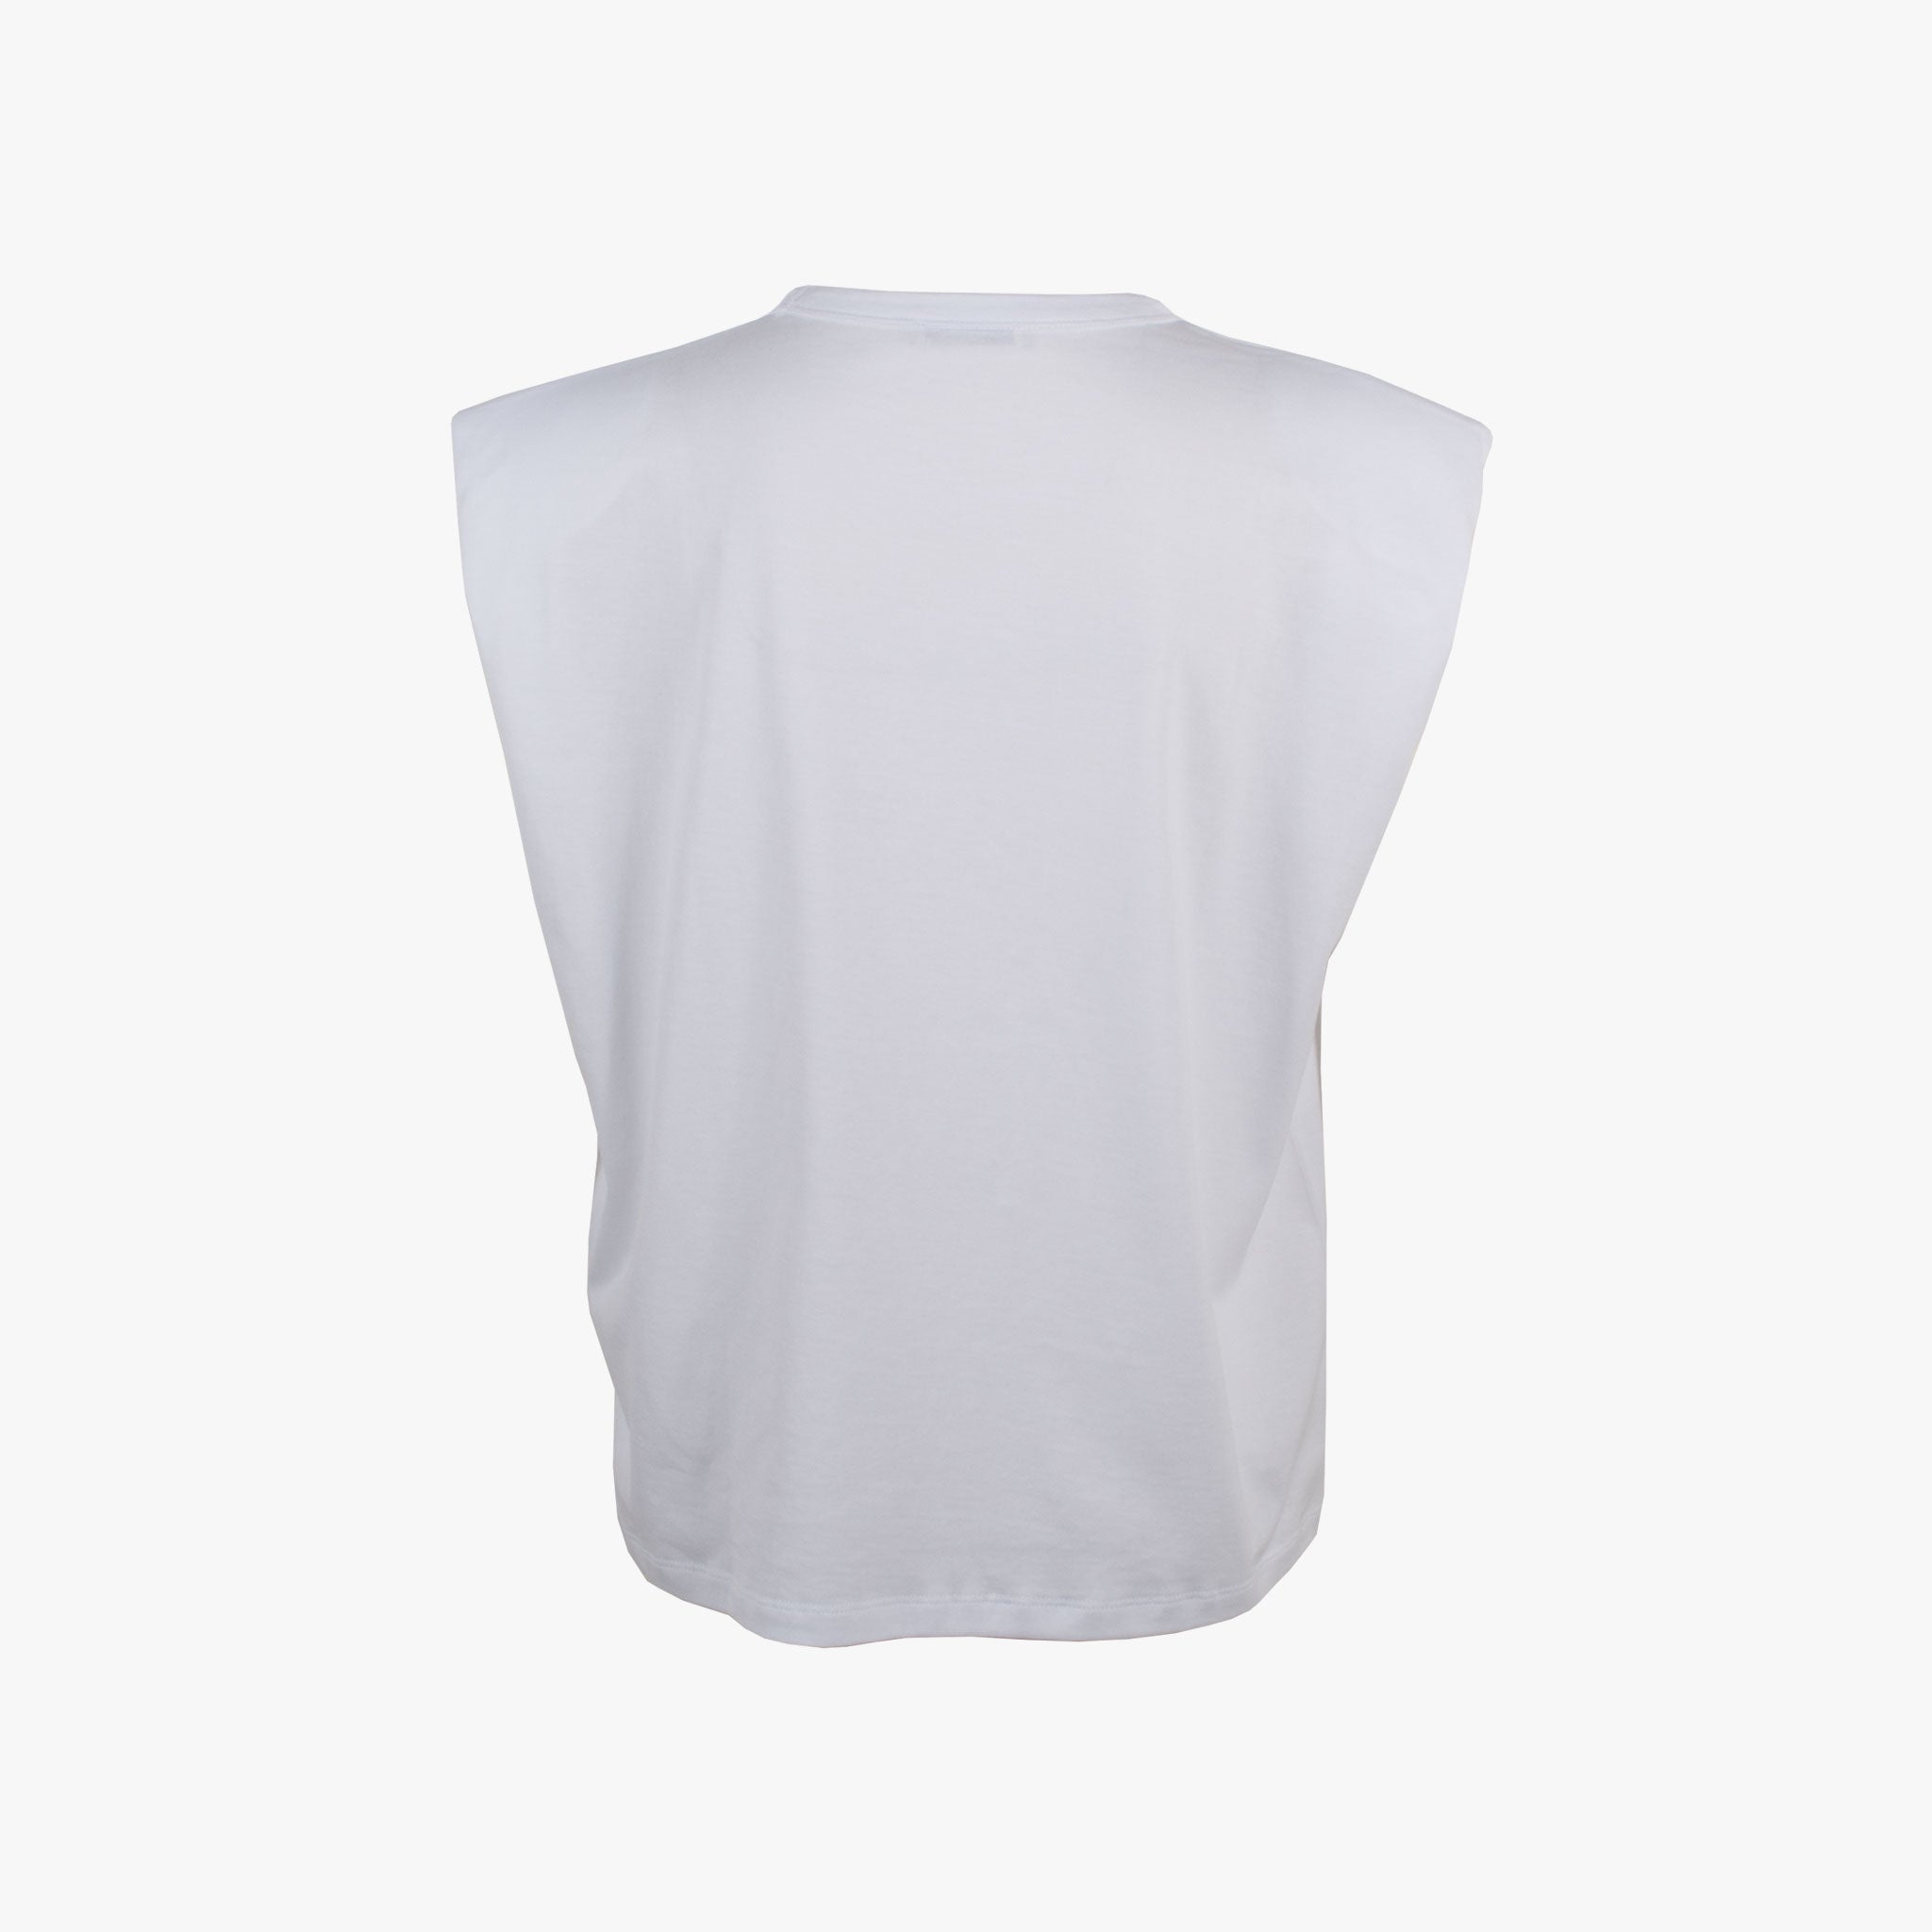 Drykorn Shirt Verna | weiß